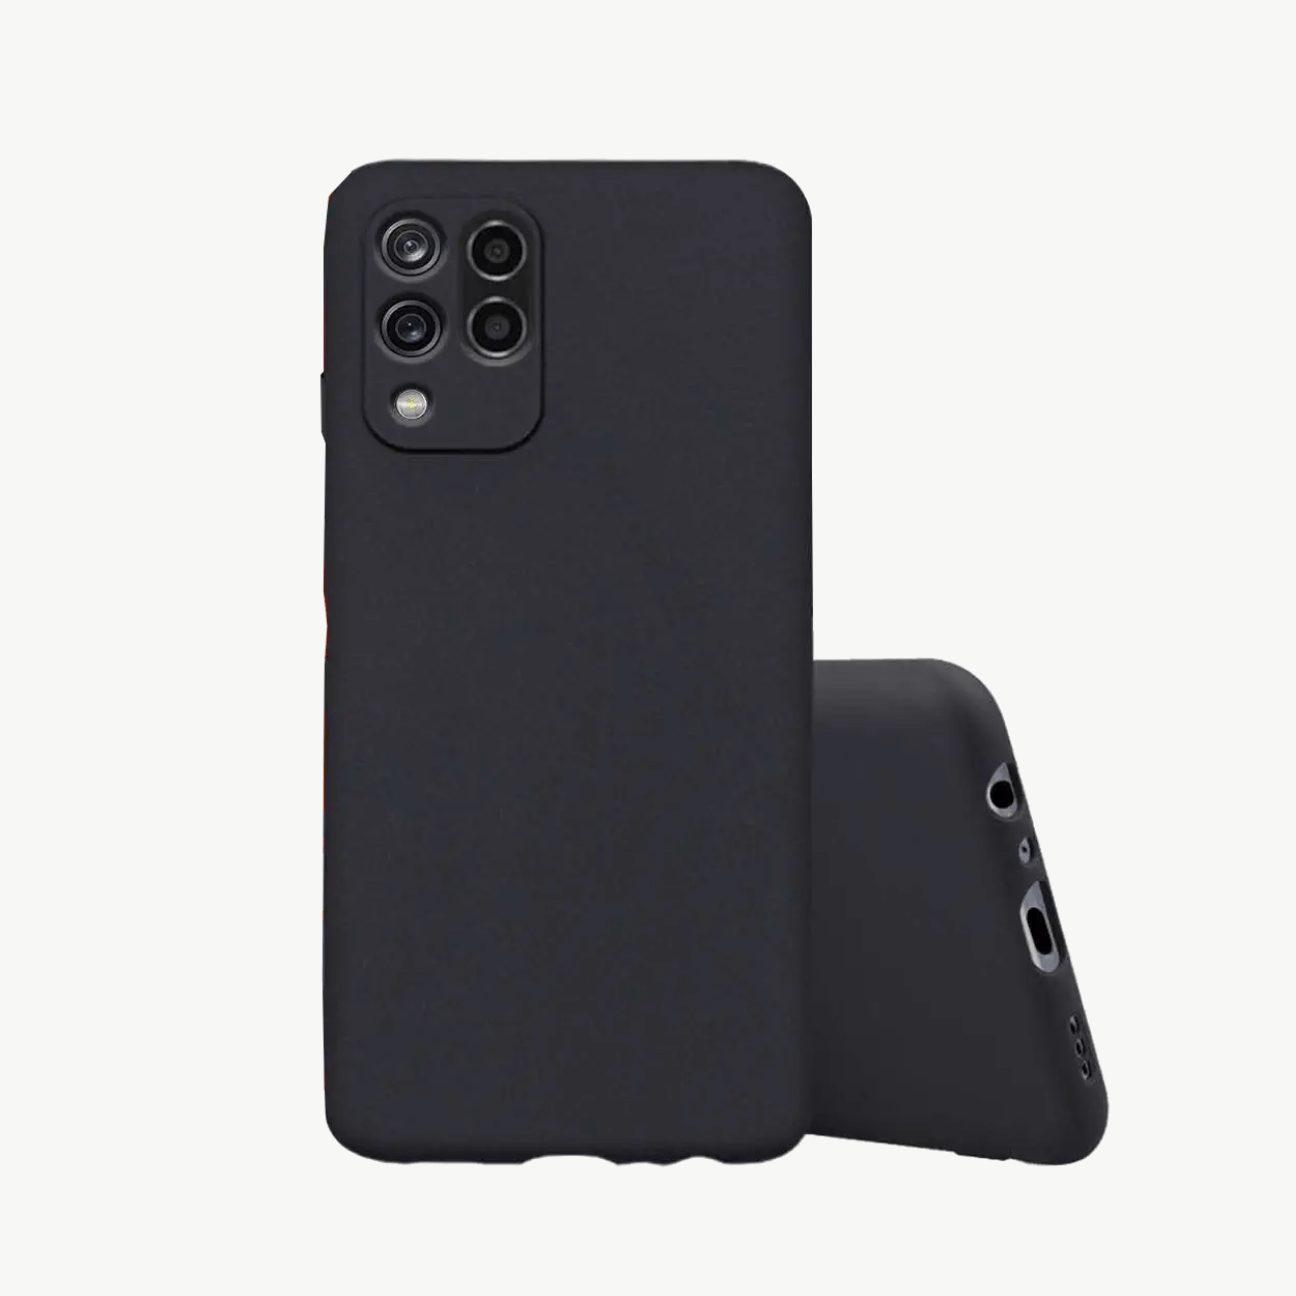 Xiaomi MI 8 Black Soft Silicone Phone Case